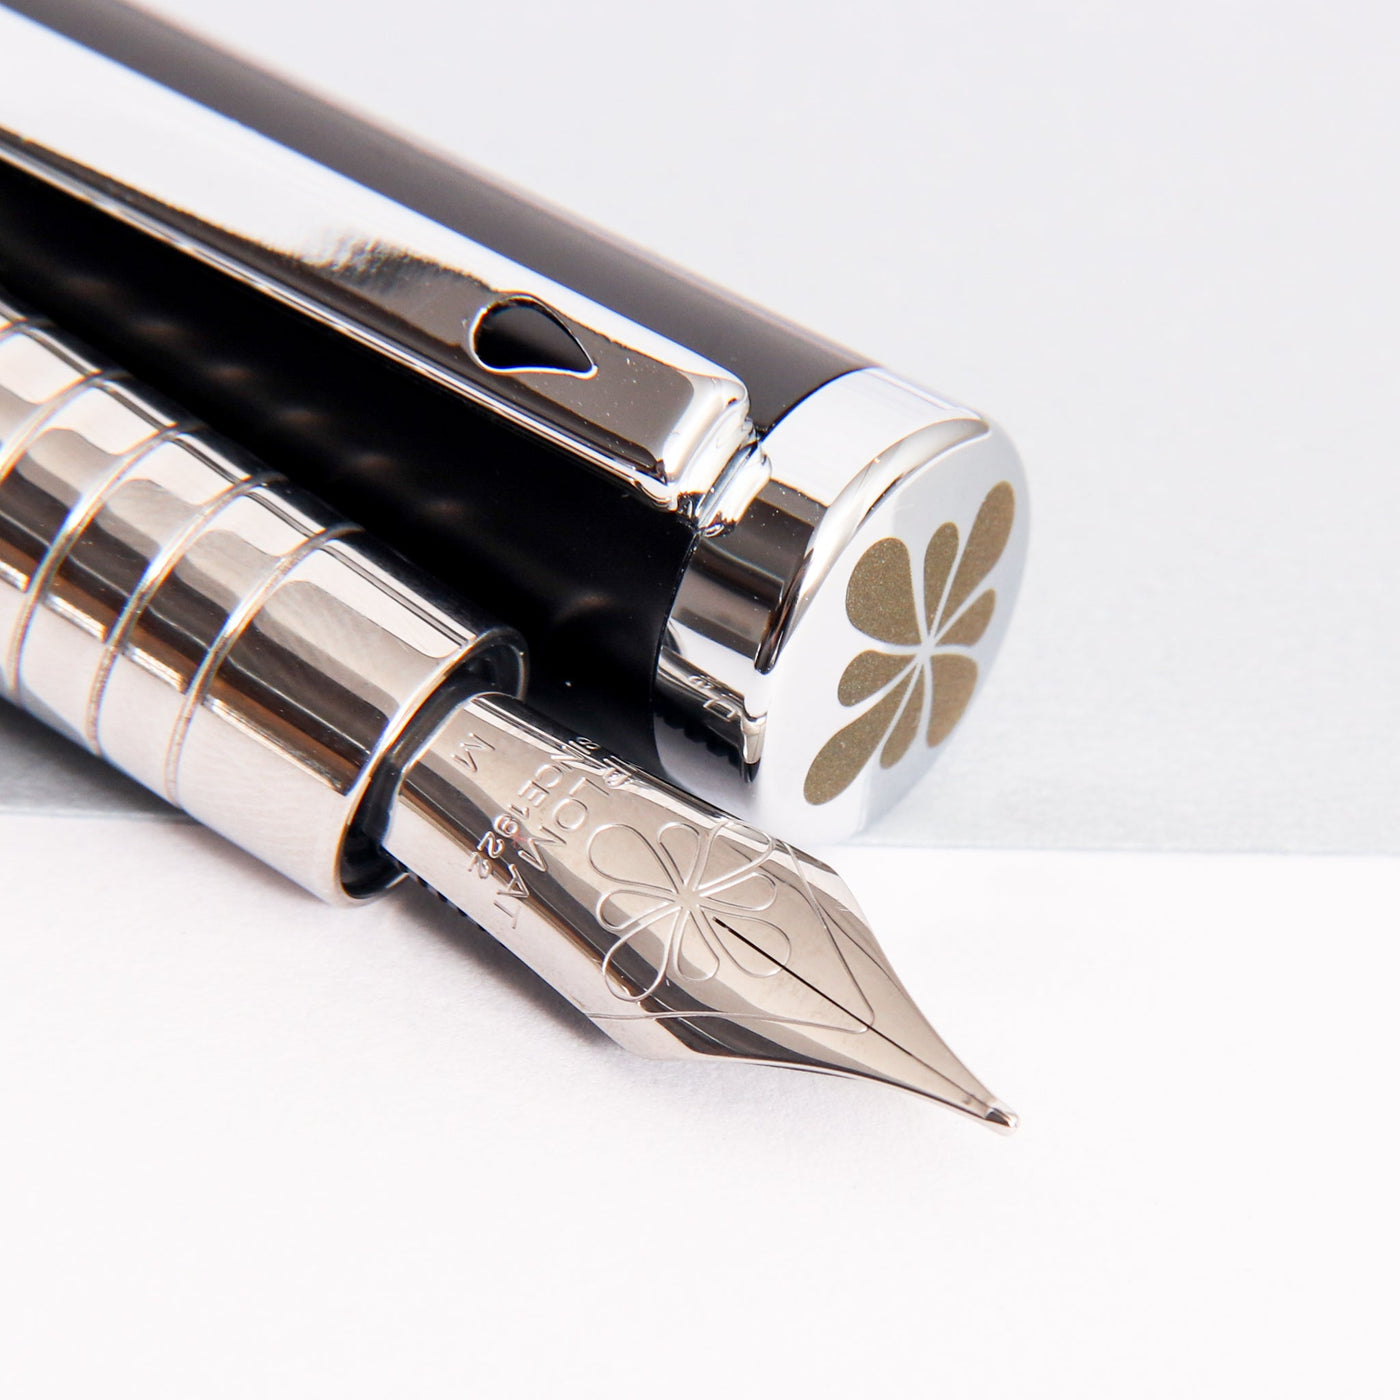 Diplomat Nexus Fountain Pen Stainless Steel Nib Details